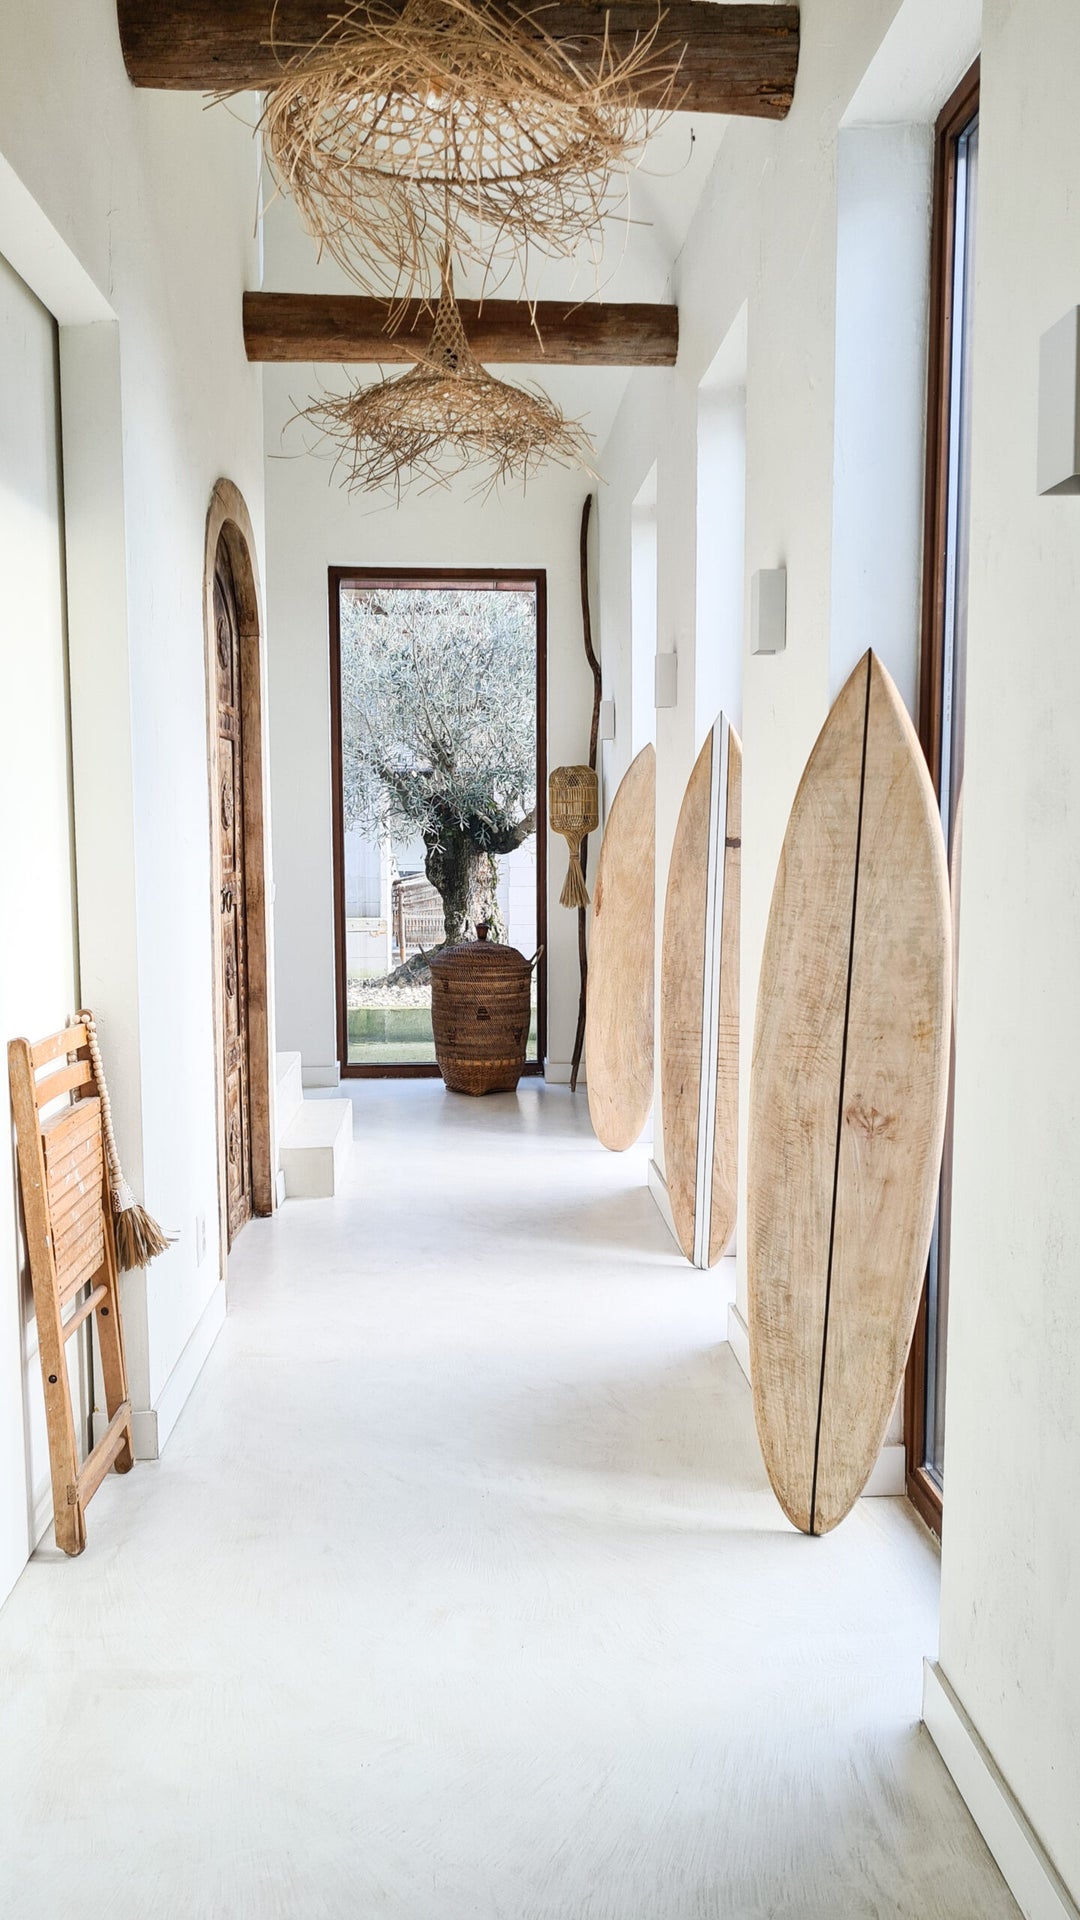 Handgemaakt Bali Surfboard Line